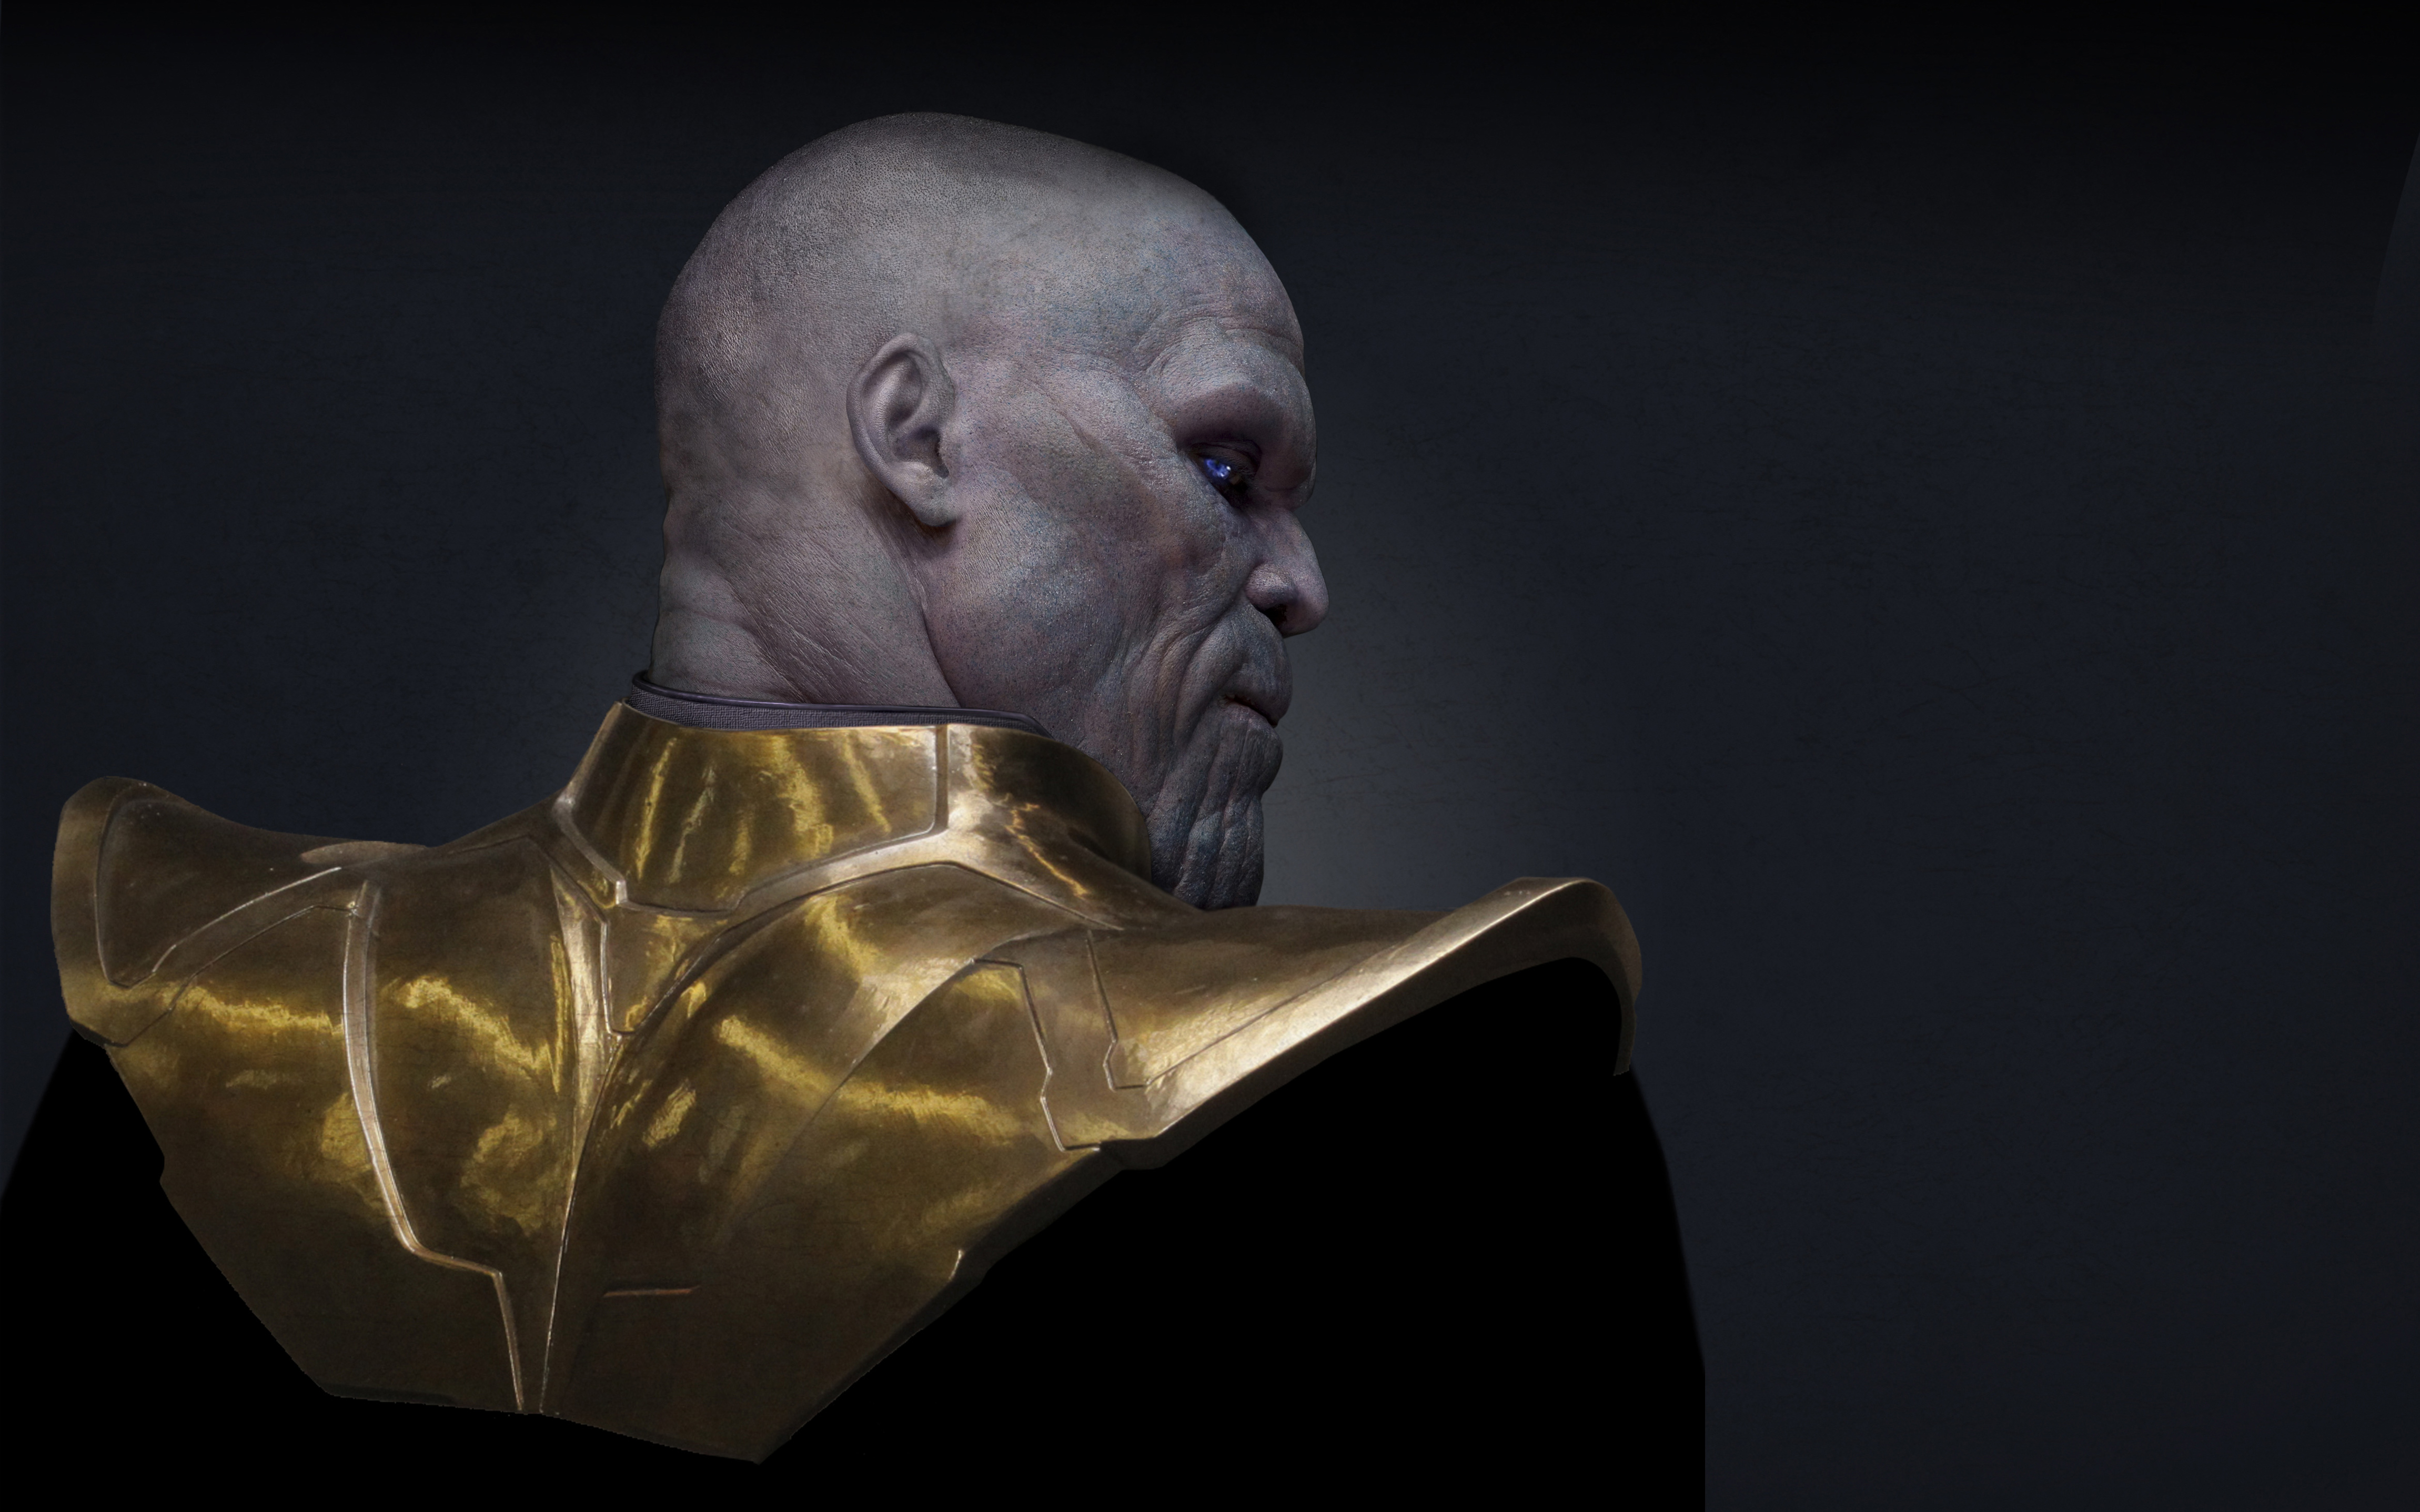 Josh Brolin as Thanos in Avengers Infinity War 4K Wallpapers